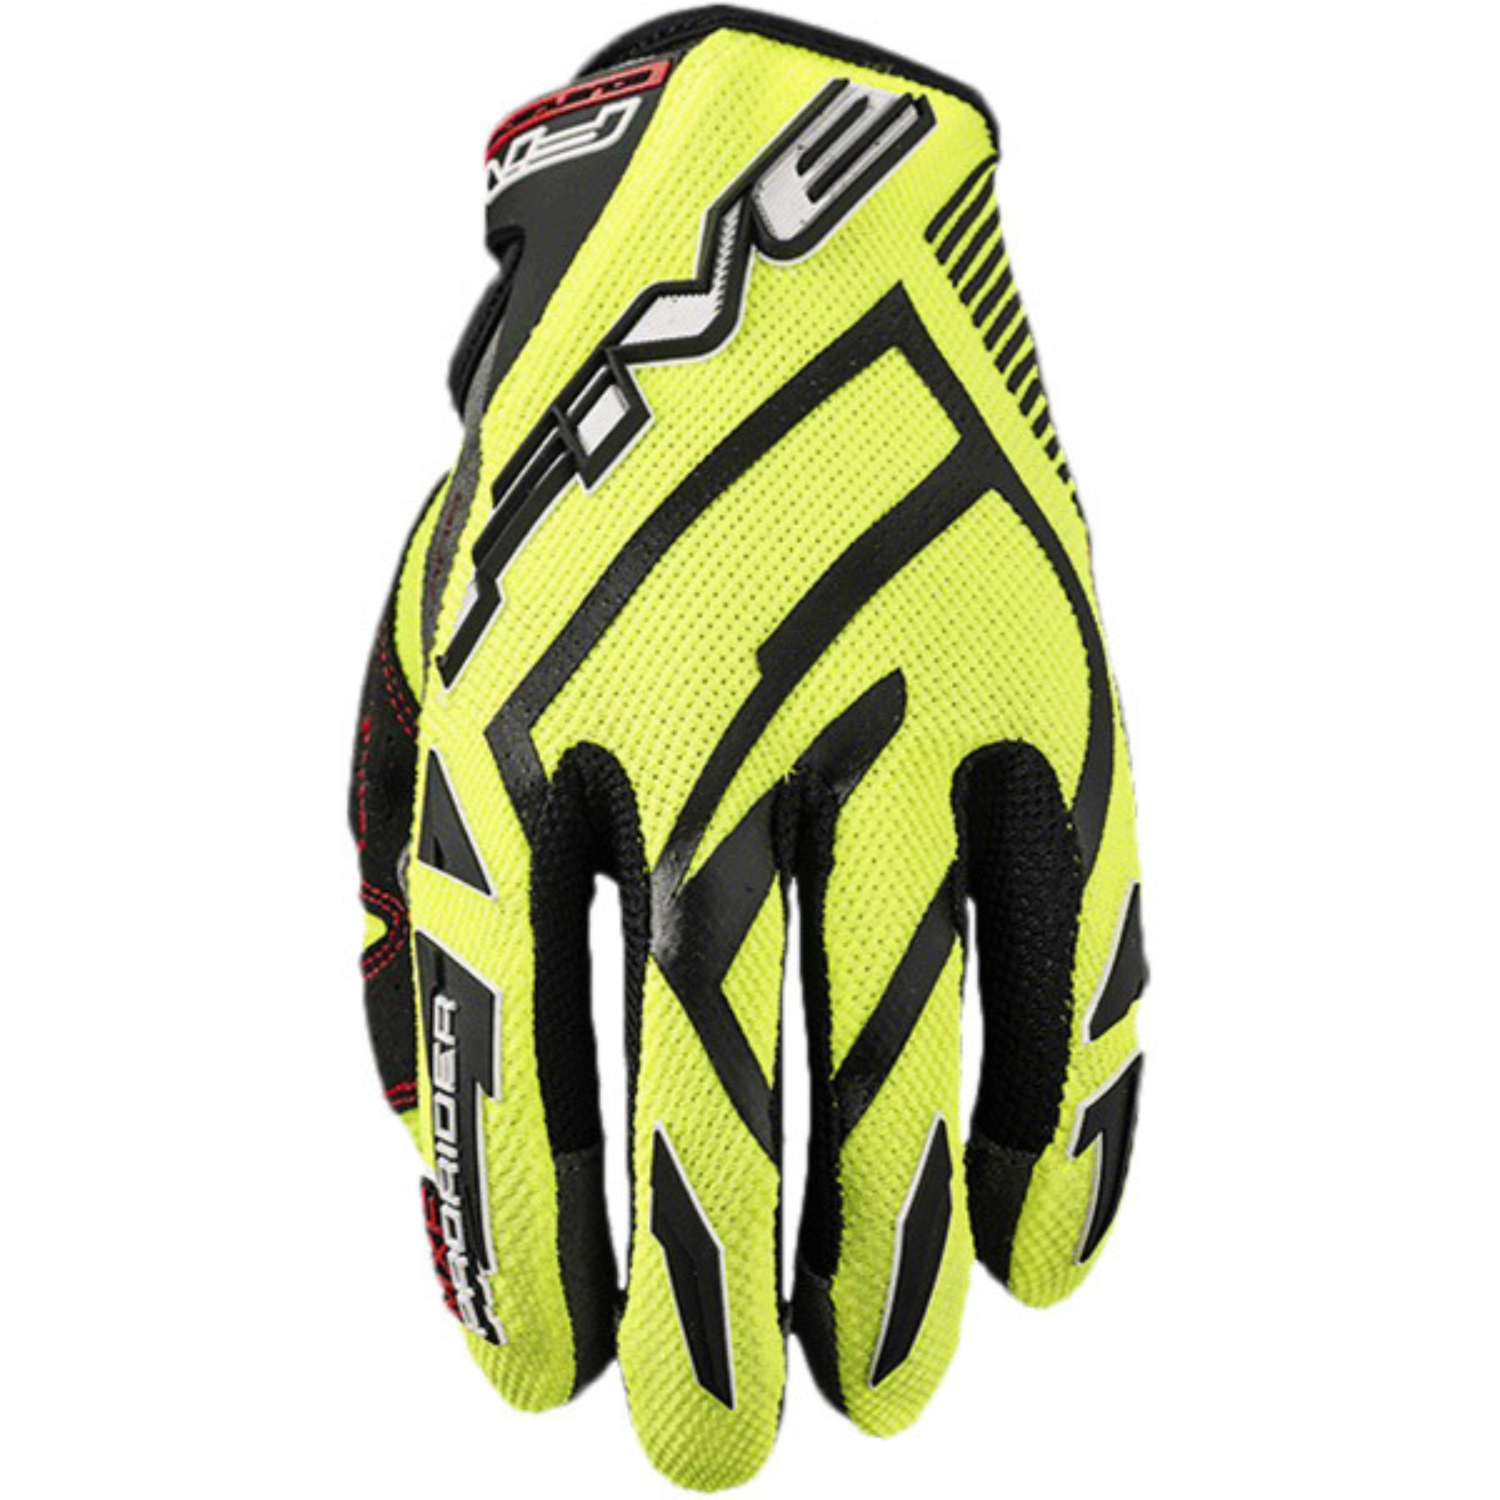 Five MXF Prorider S Gloves Black Yellow Size L